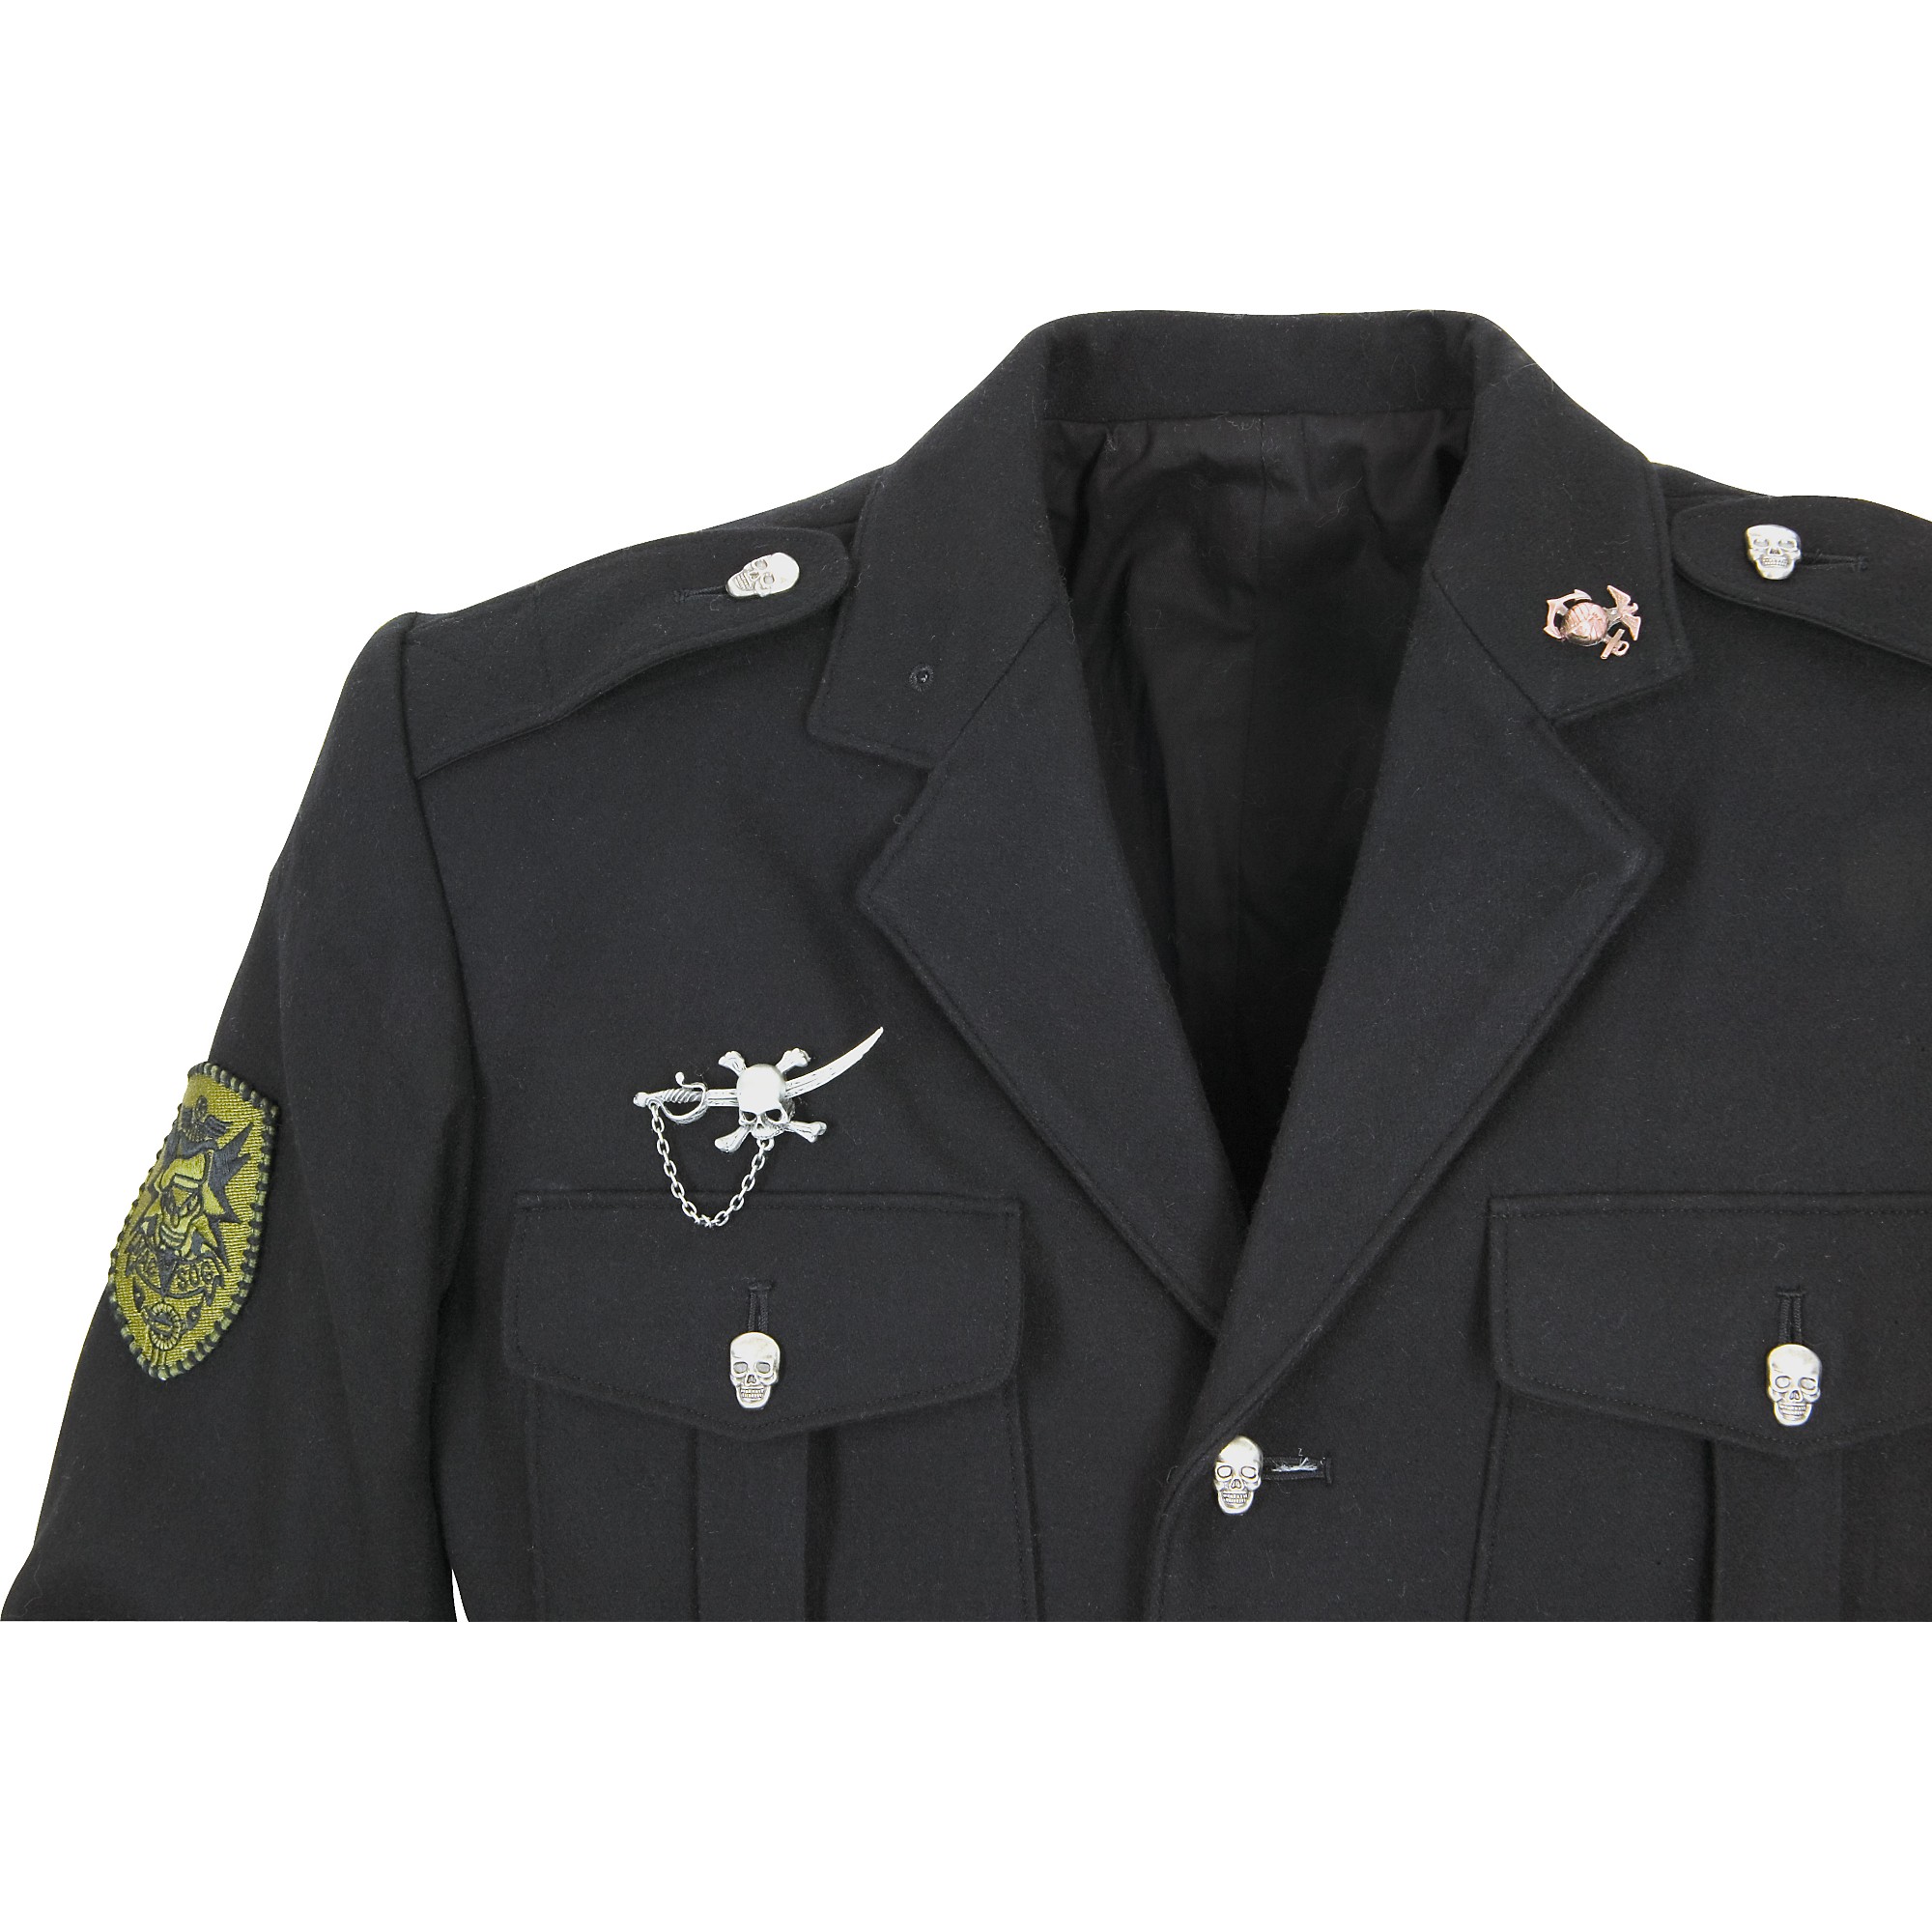 Pin on Black military jacket